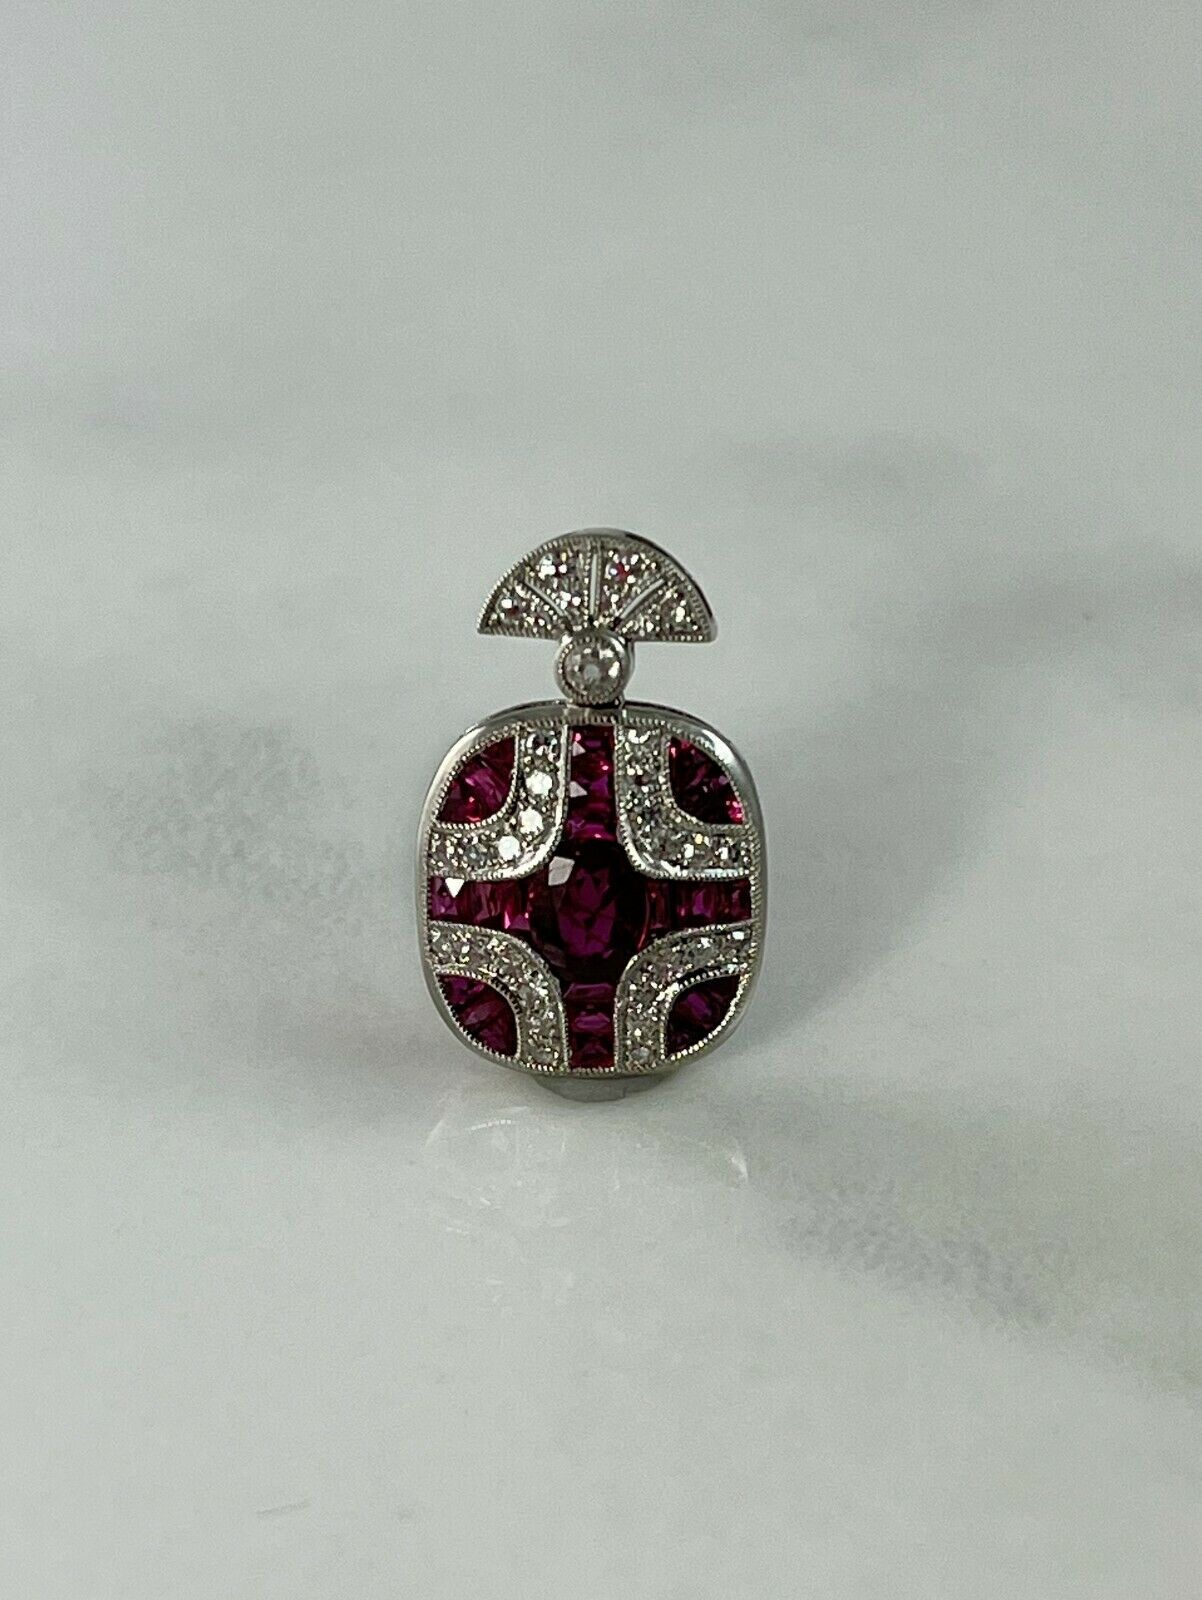 Ruby Diamond Platinum Pendant Necklace Art Deco Oval Cut Antique Finish Natural